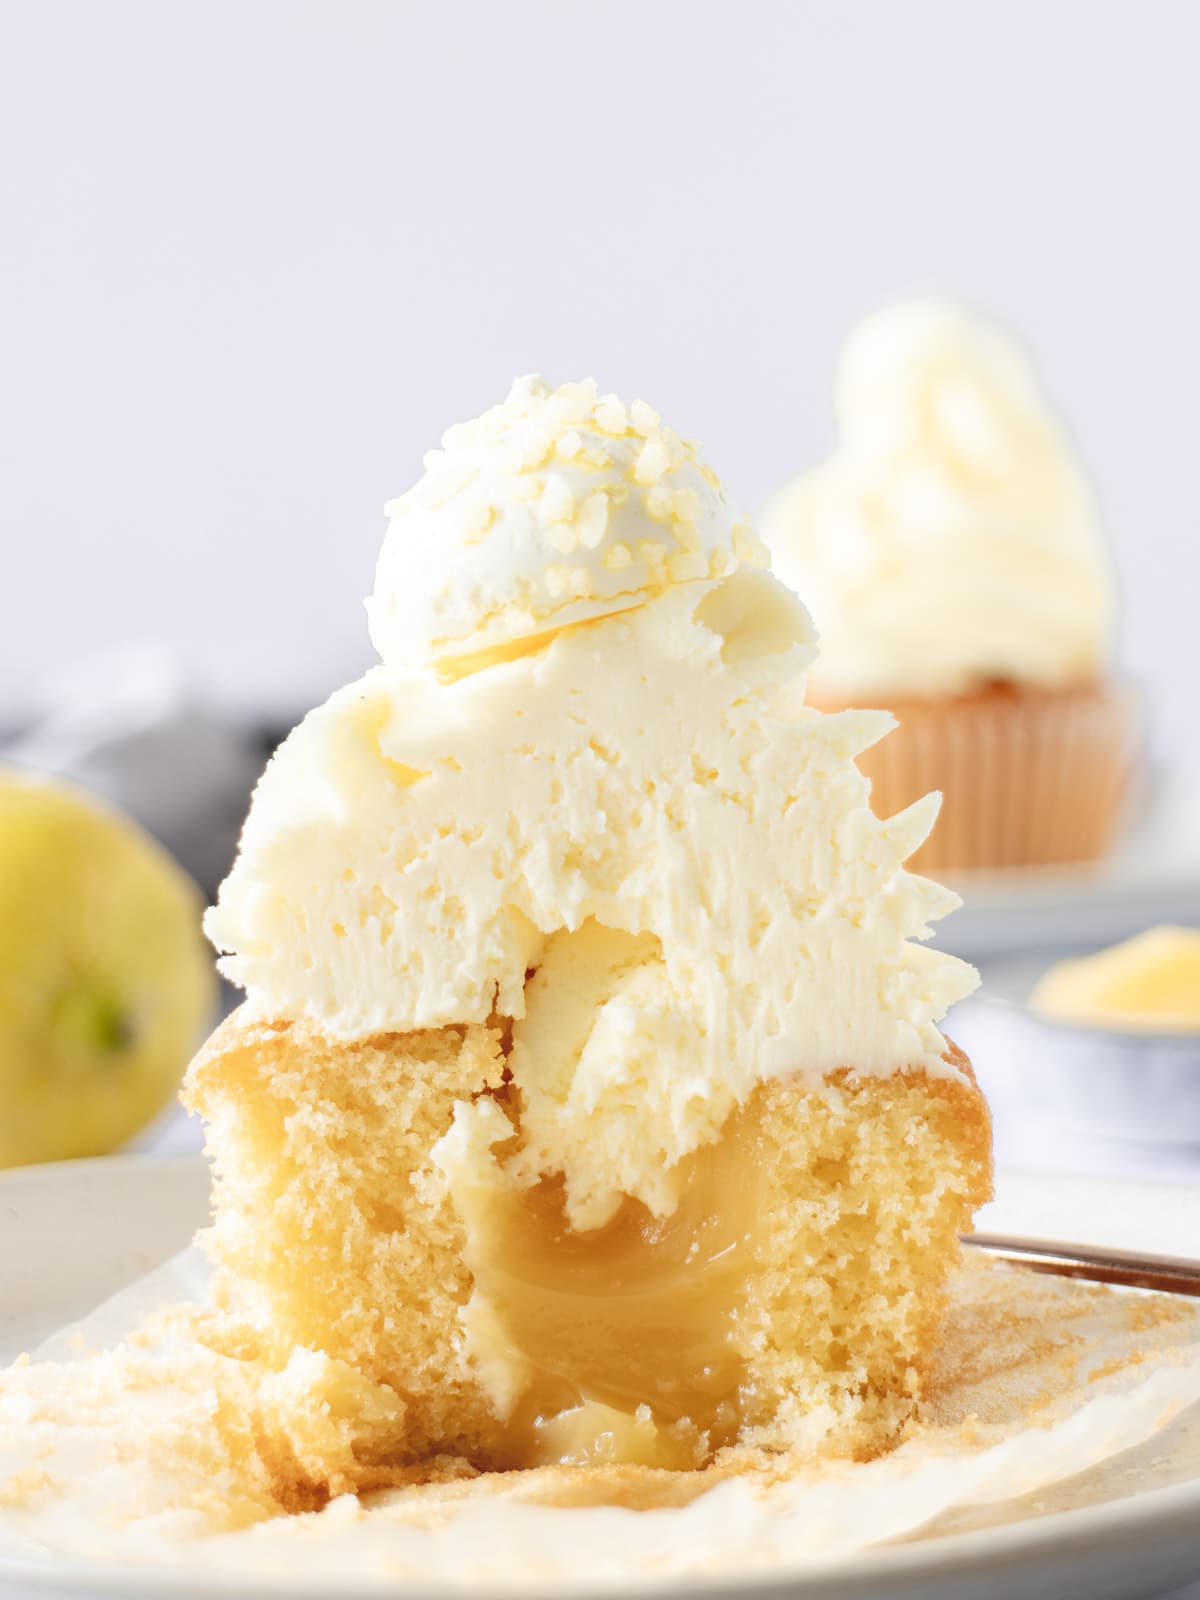 Cupcake cut in half to see a lemon curd filling